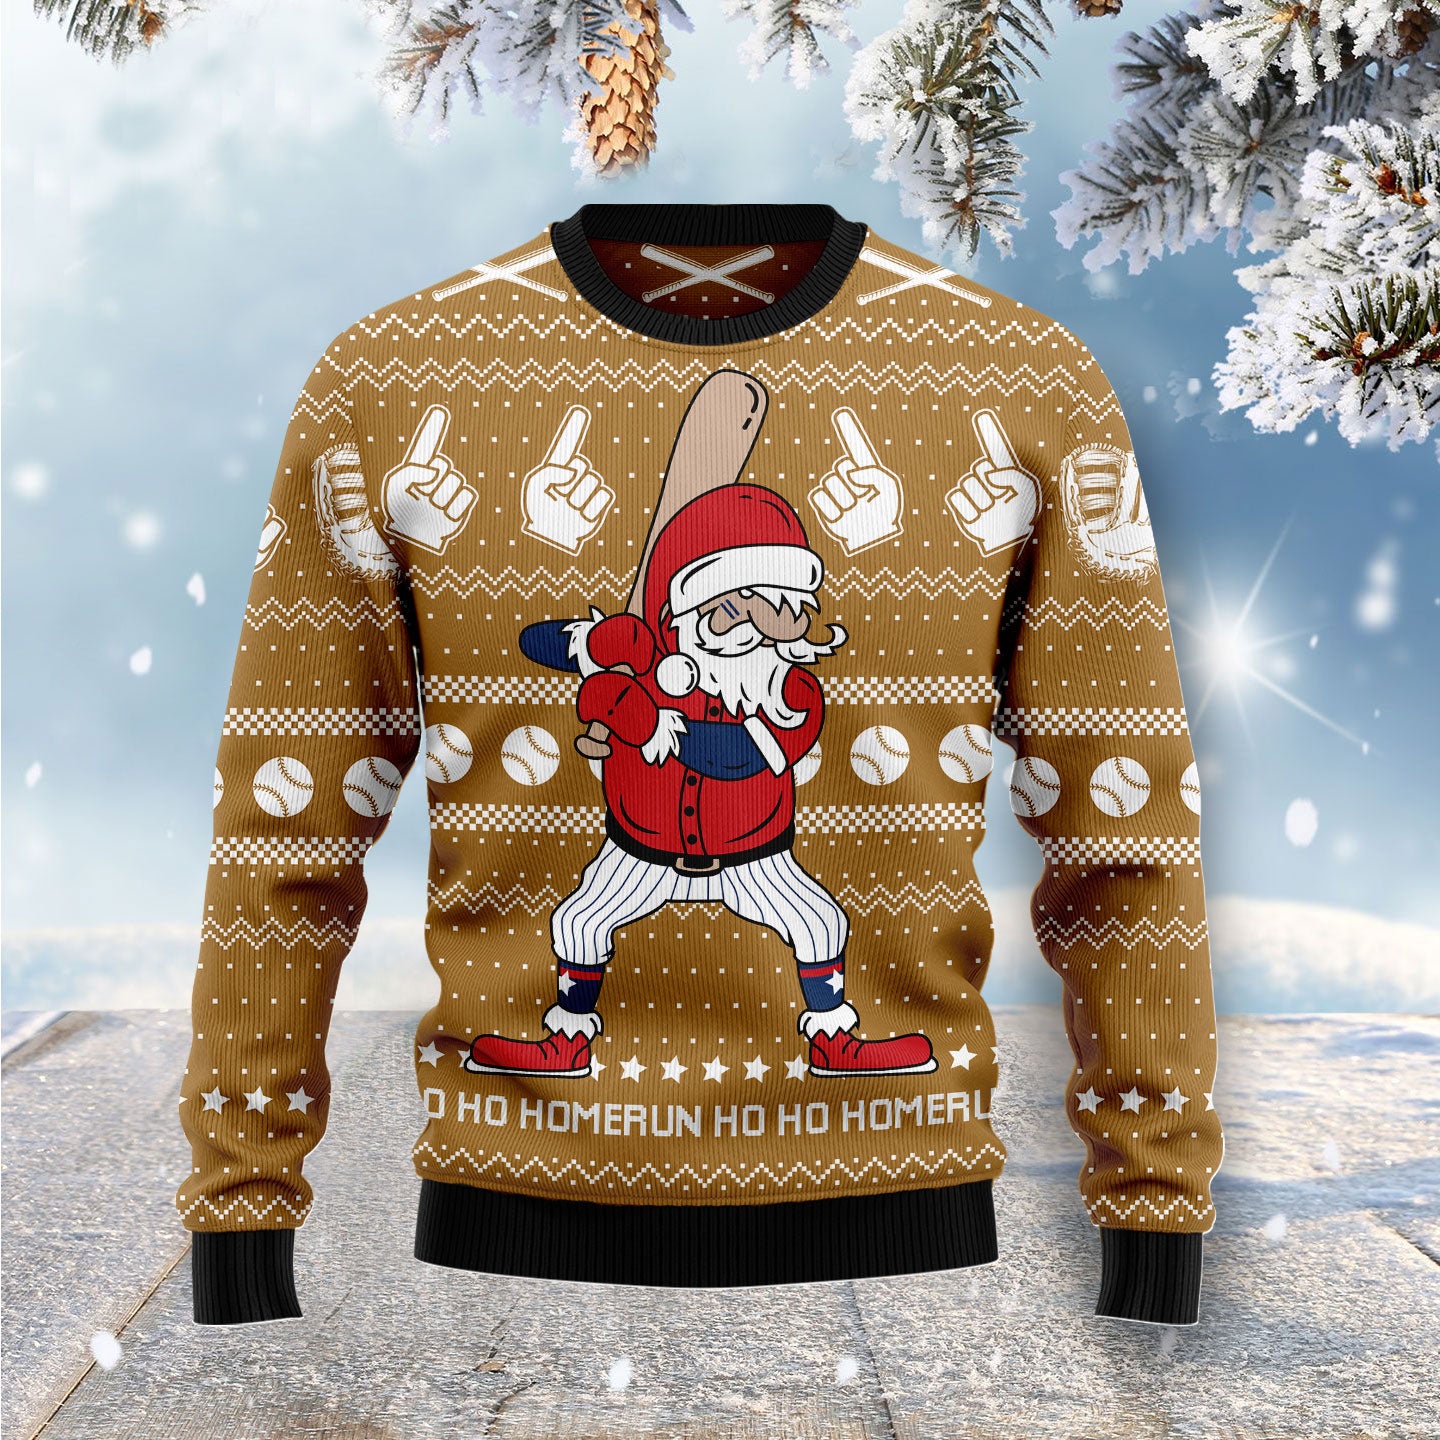 Atlanta Braves Baseball Custom Ugly Christmas Sweater - EmonShop - Tagotee